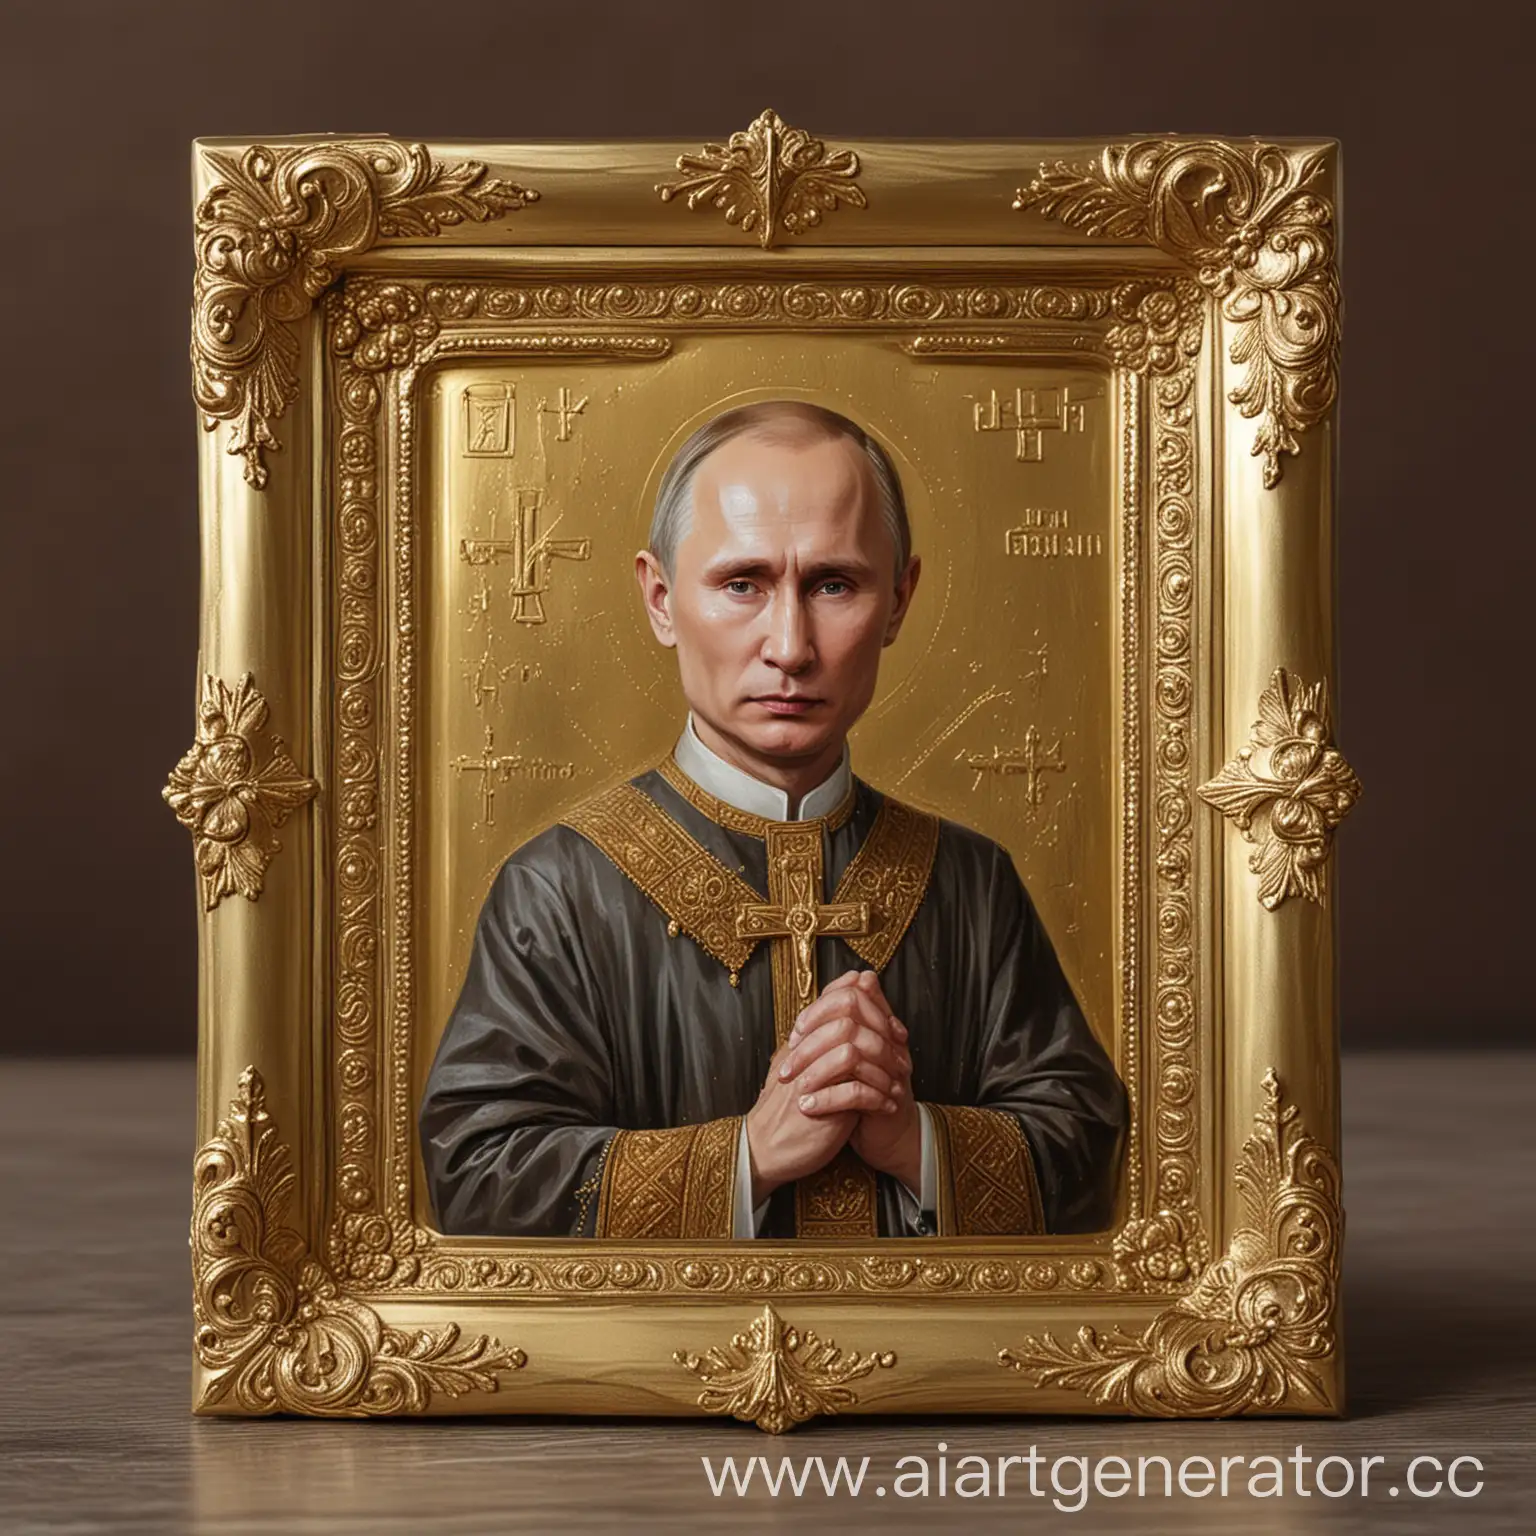 Golden-Framed-Icon-of-Vladimir-Putin-with-Religious-Symbols